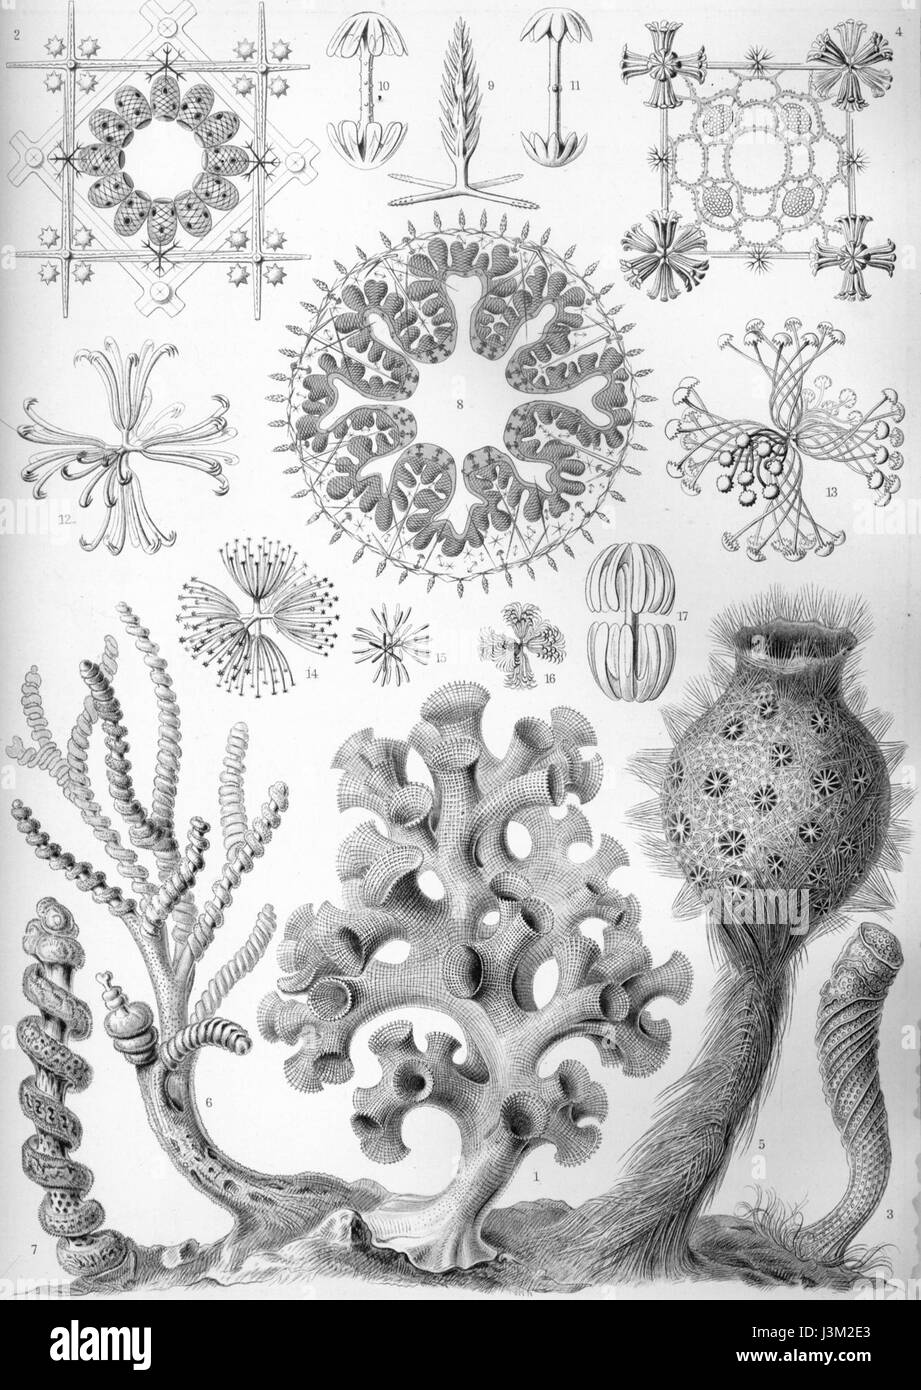 Haeckel Hexactinellae Stockfoto